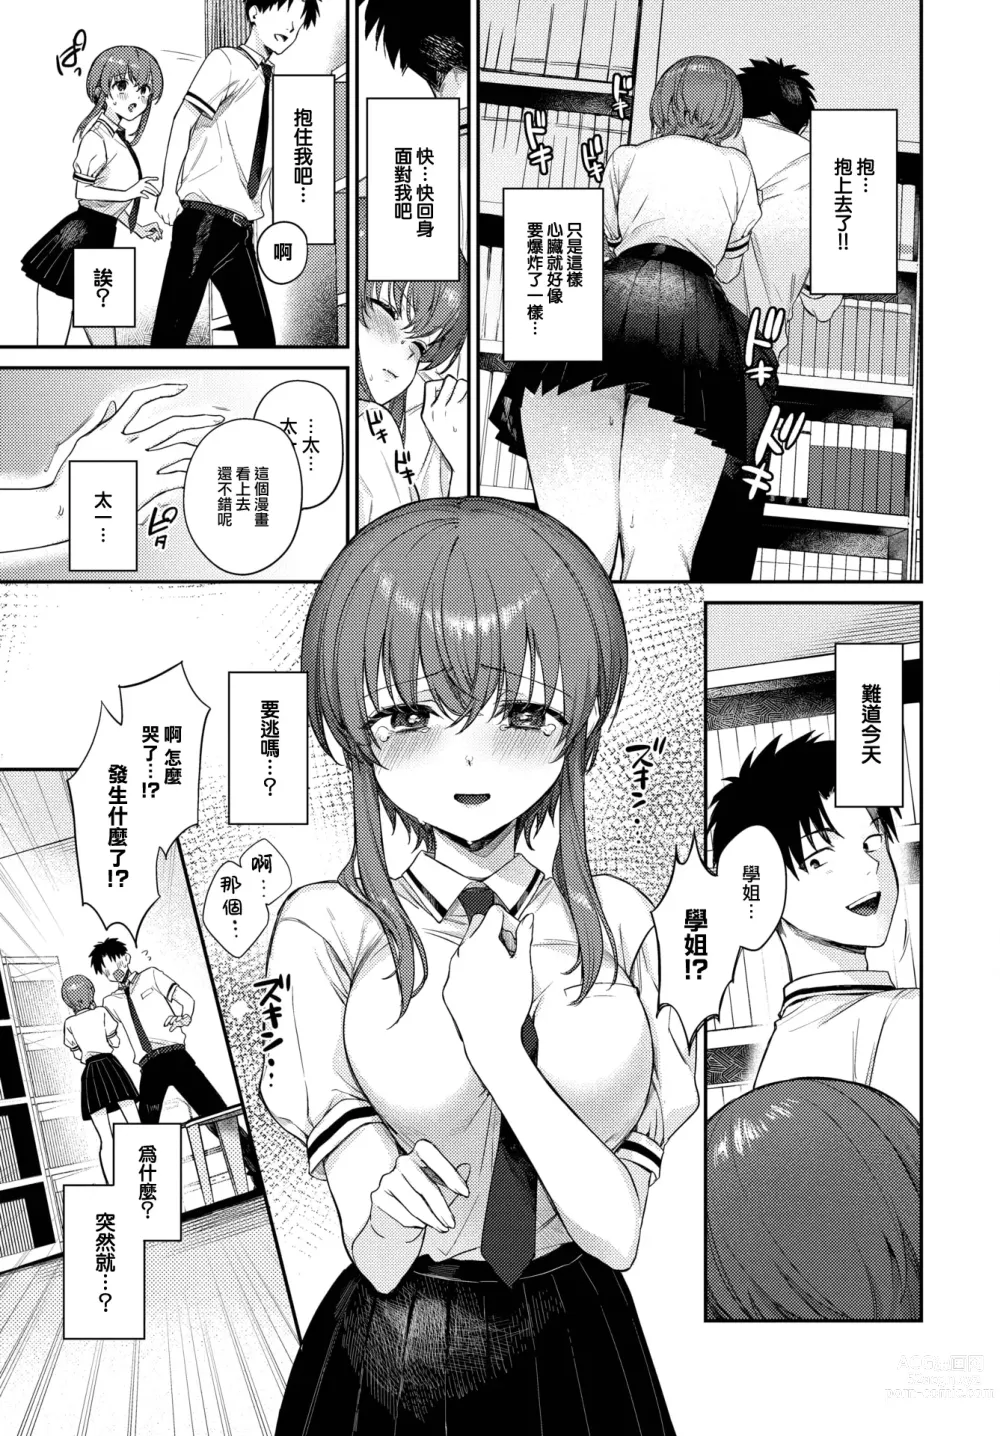 Page 6 of manga Come Pain!